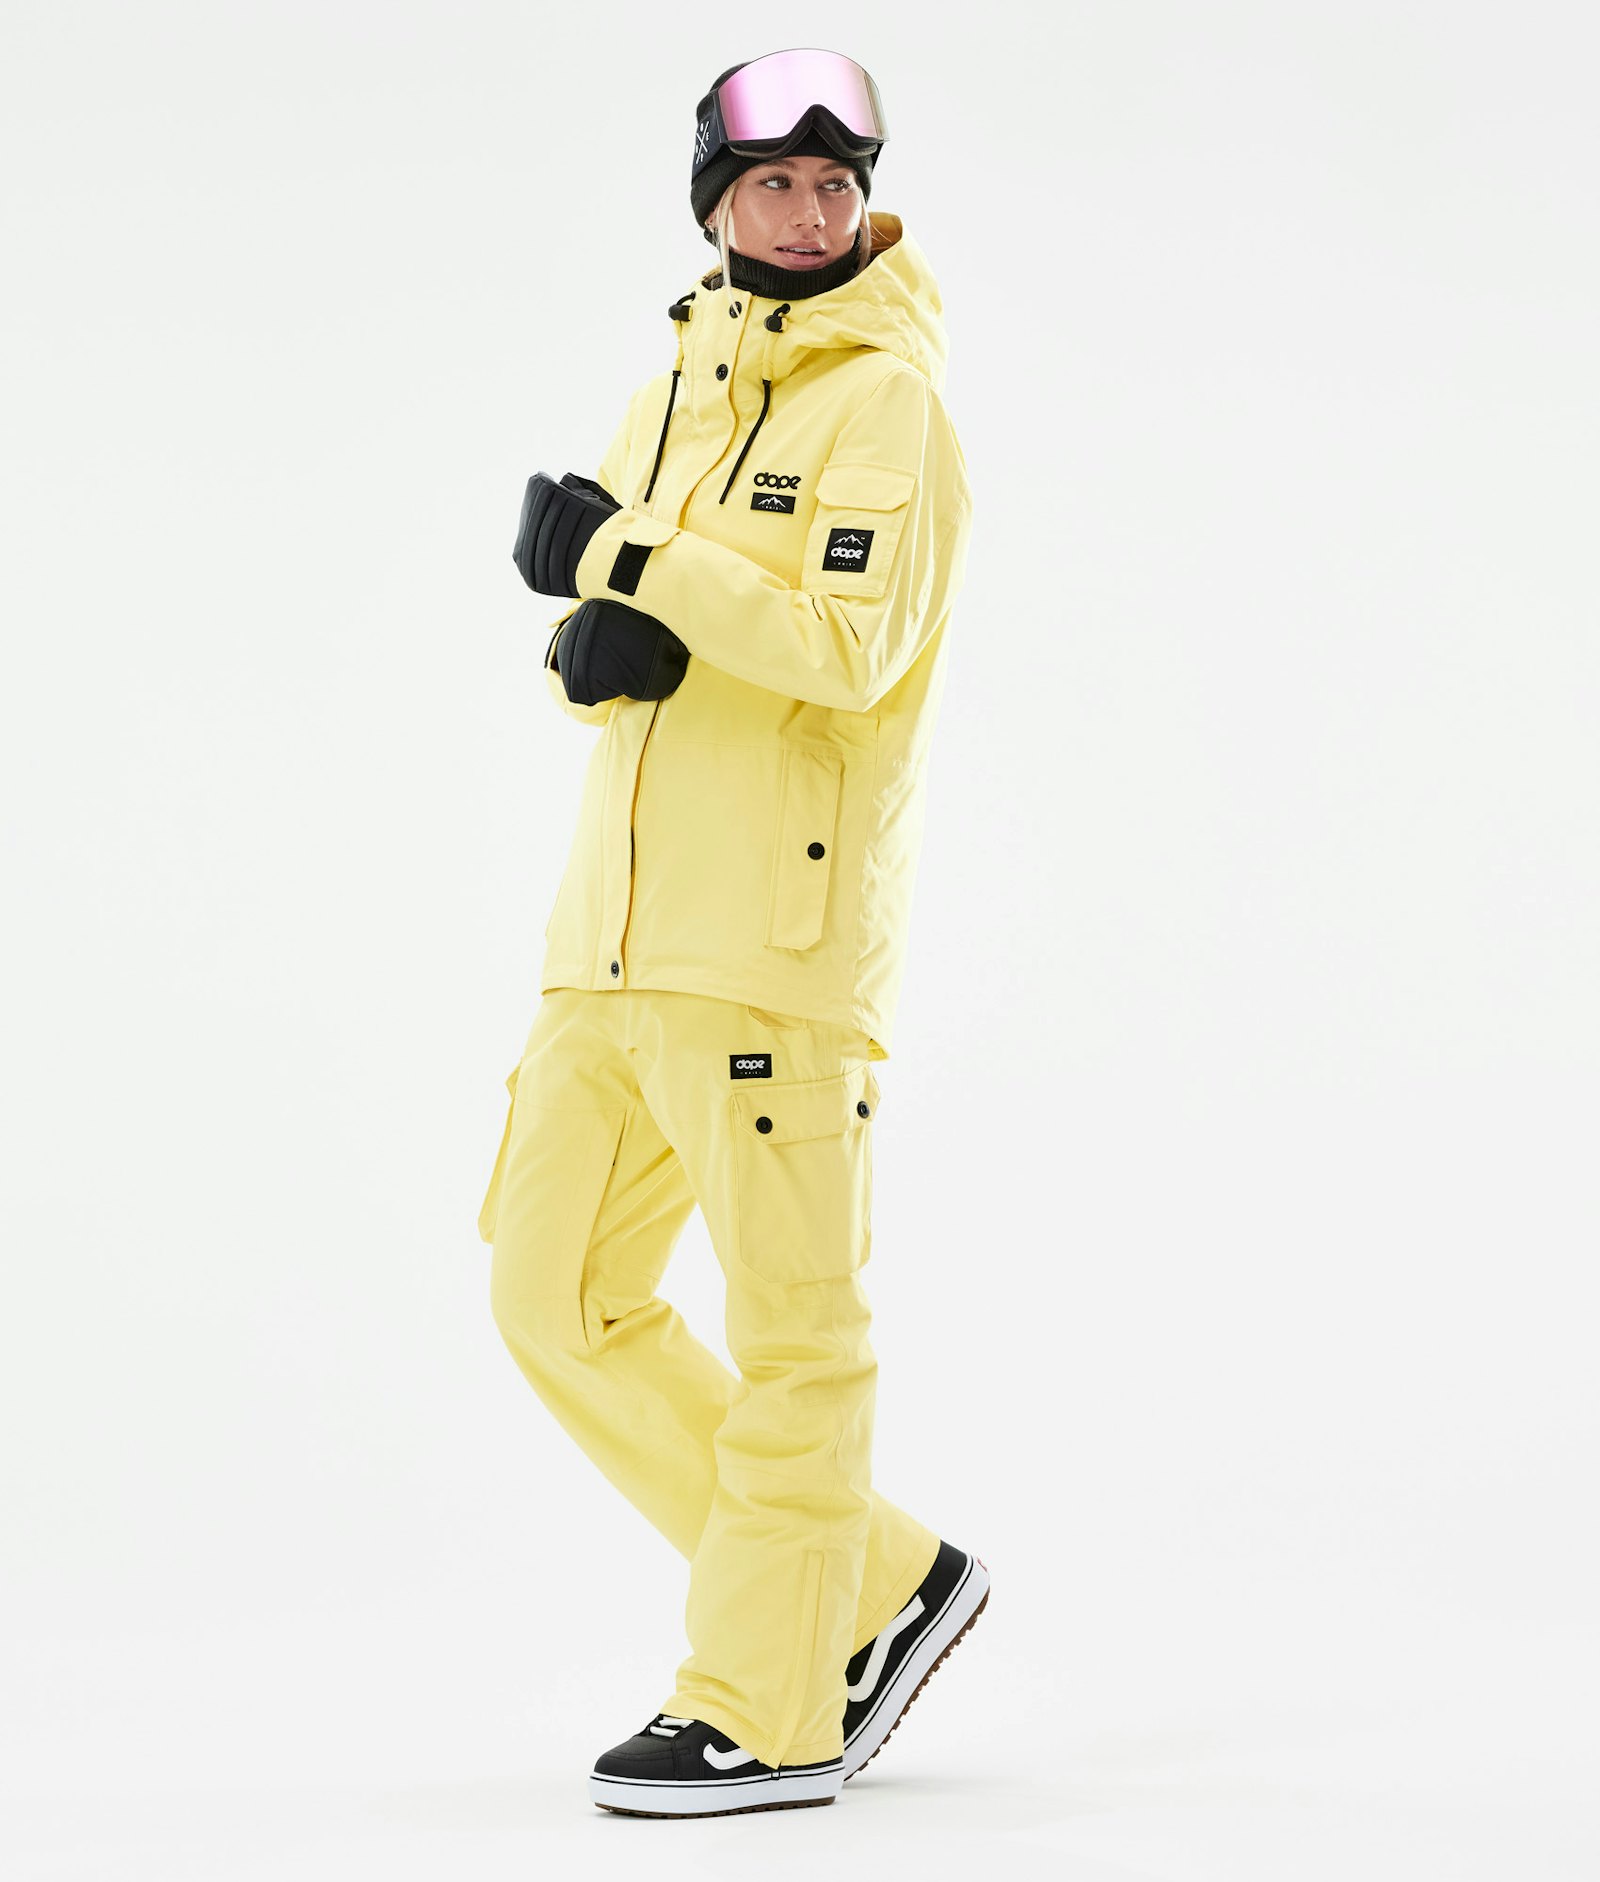 Dope Adept W 2021 Snowboard Jacket Women Faded Yellow